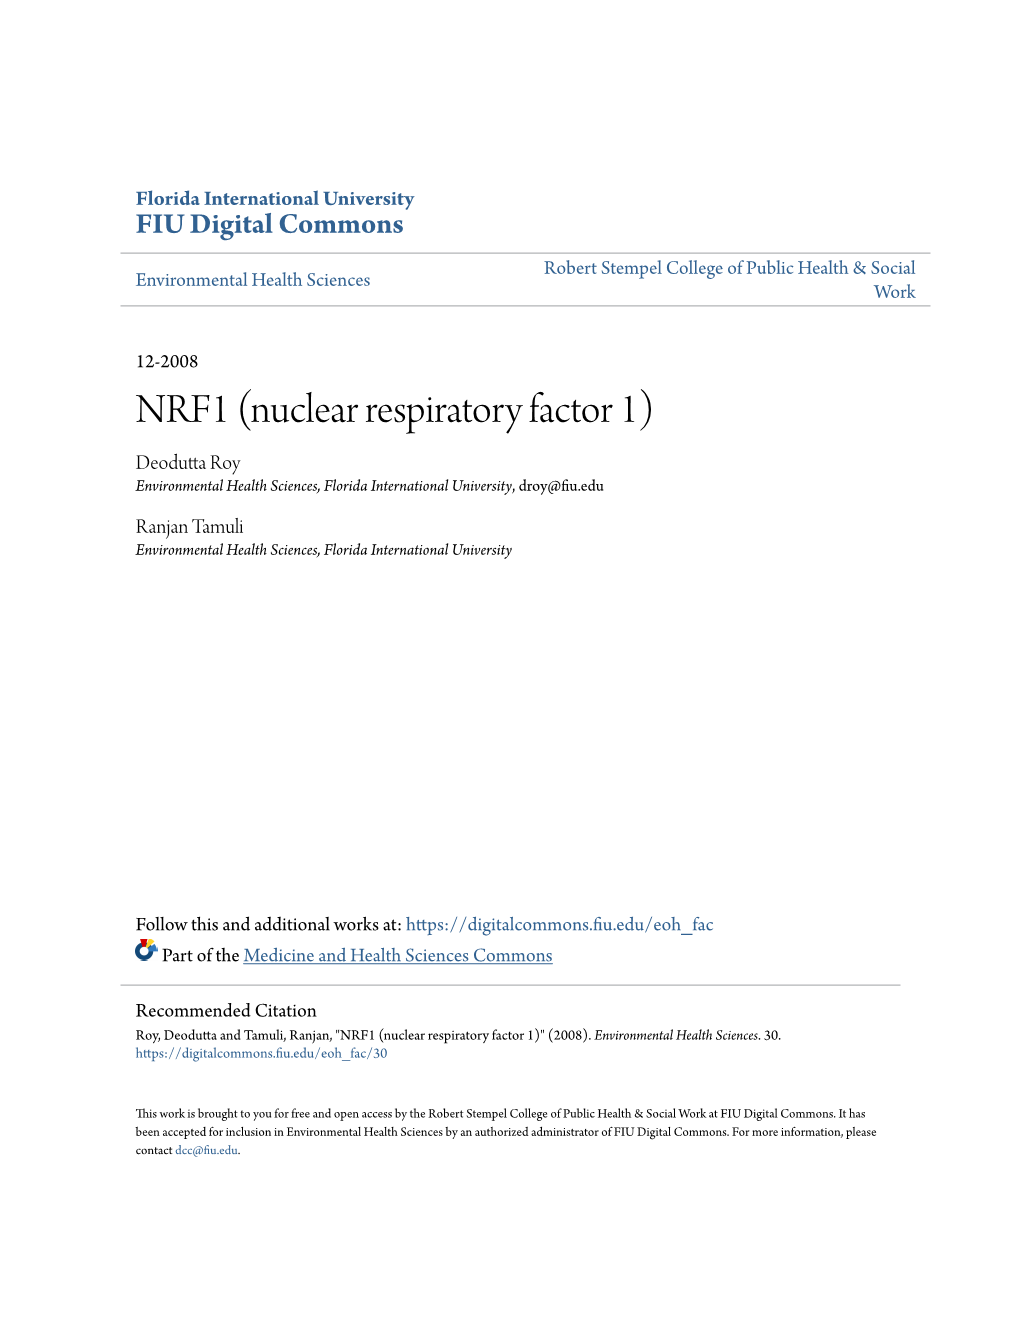 NRF1 (Nuclear Respiratory Factor 1) Deodutta Roy Environmental Health Sciences, Florida International University, Droy@Fiu.Edu